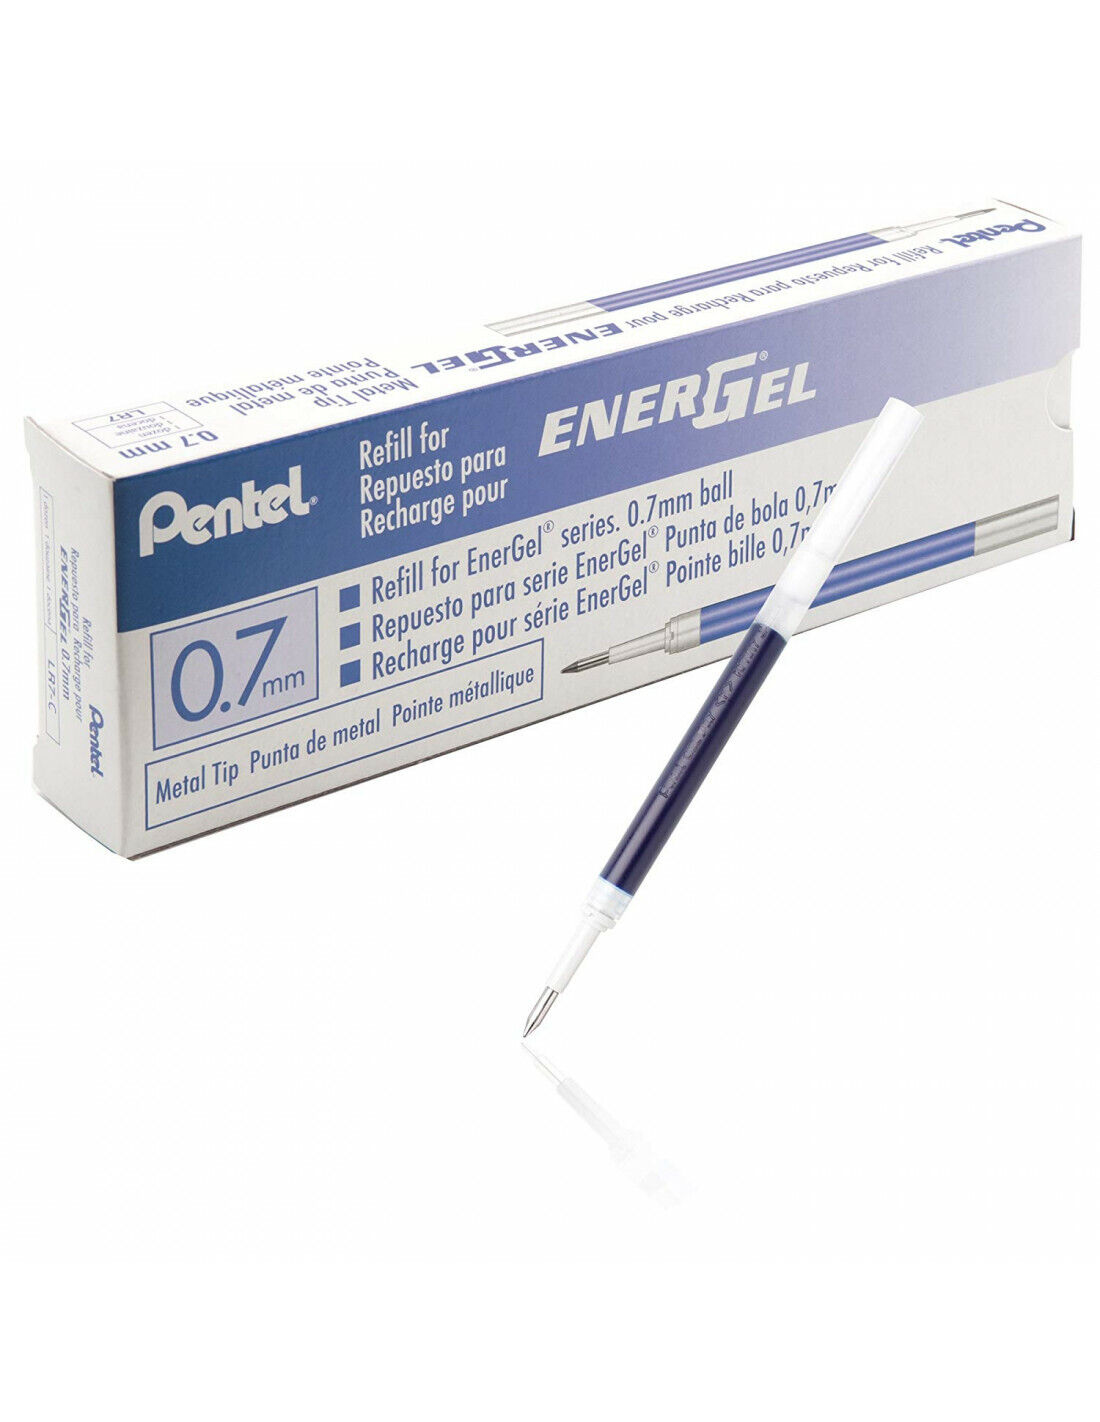 10 X Pentel LR7 Roller Refill for EnerGel Gel Pen 0.7mm Metal Tip - Blue Ink